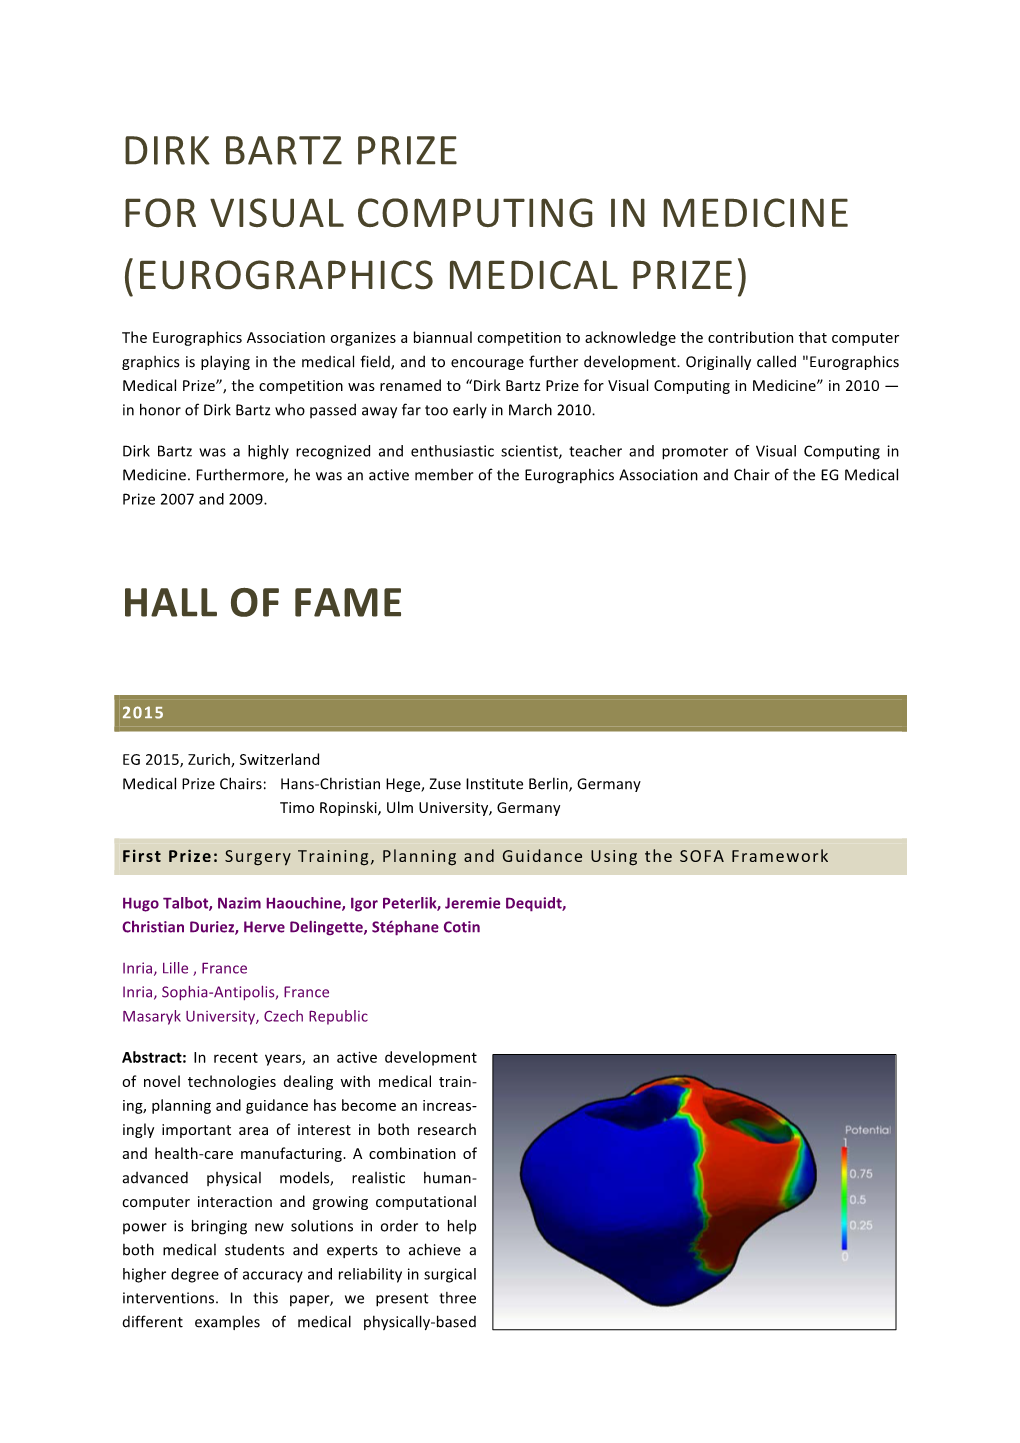 Dirk Bartz Prize for Visual Computing in Medicine (Eurographics Medical Prize)